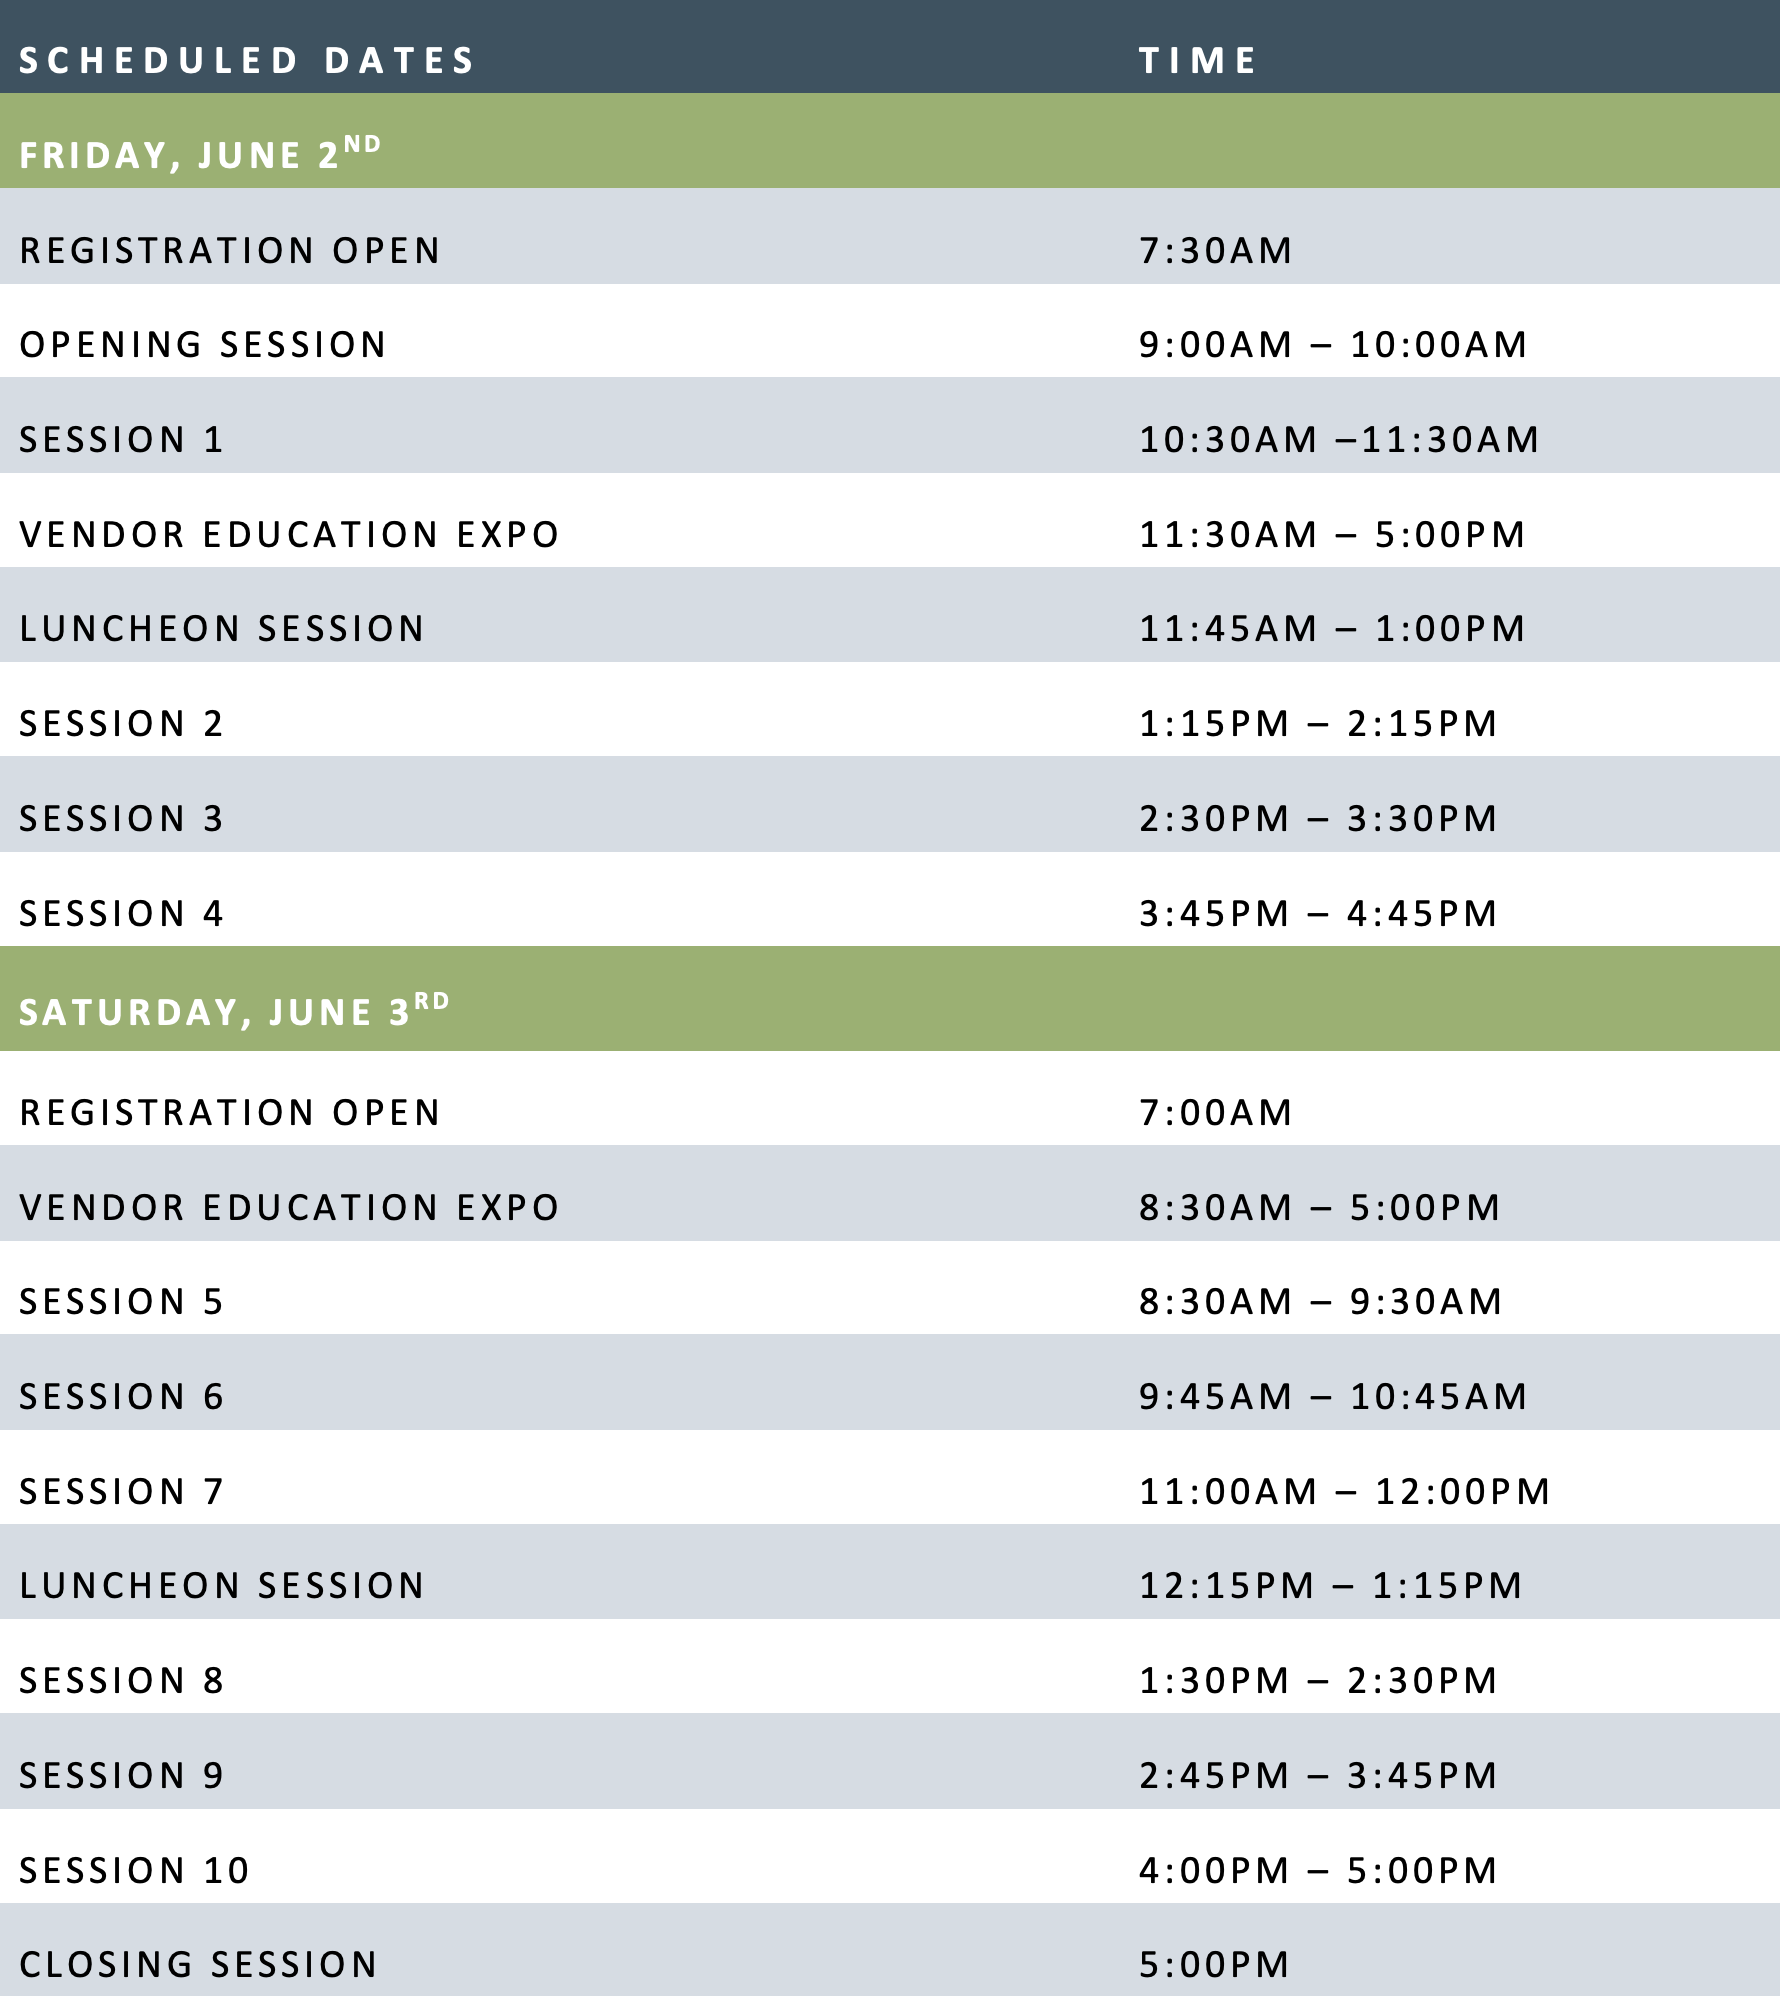 Tentative Conference Schedule